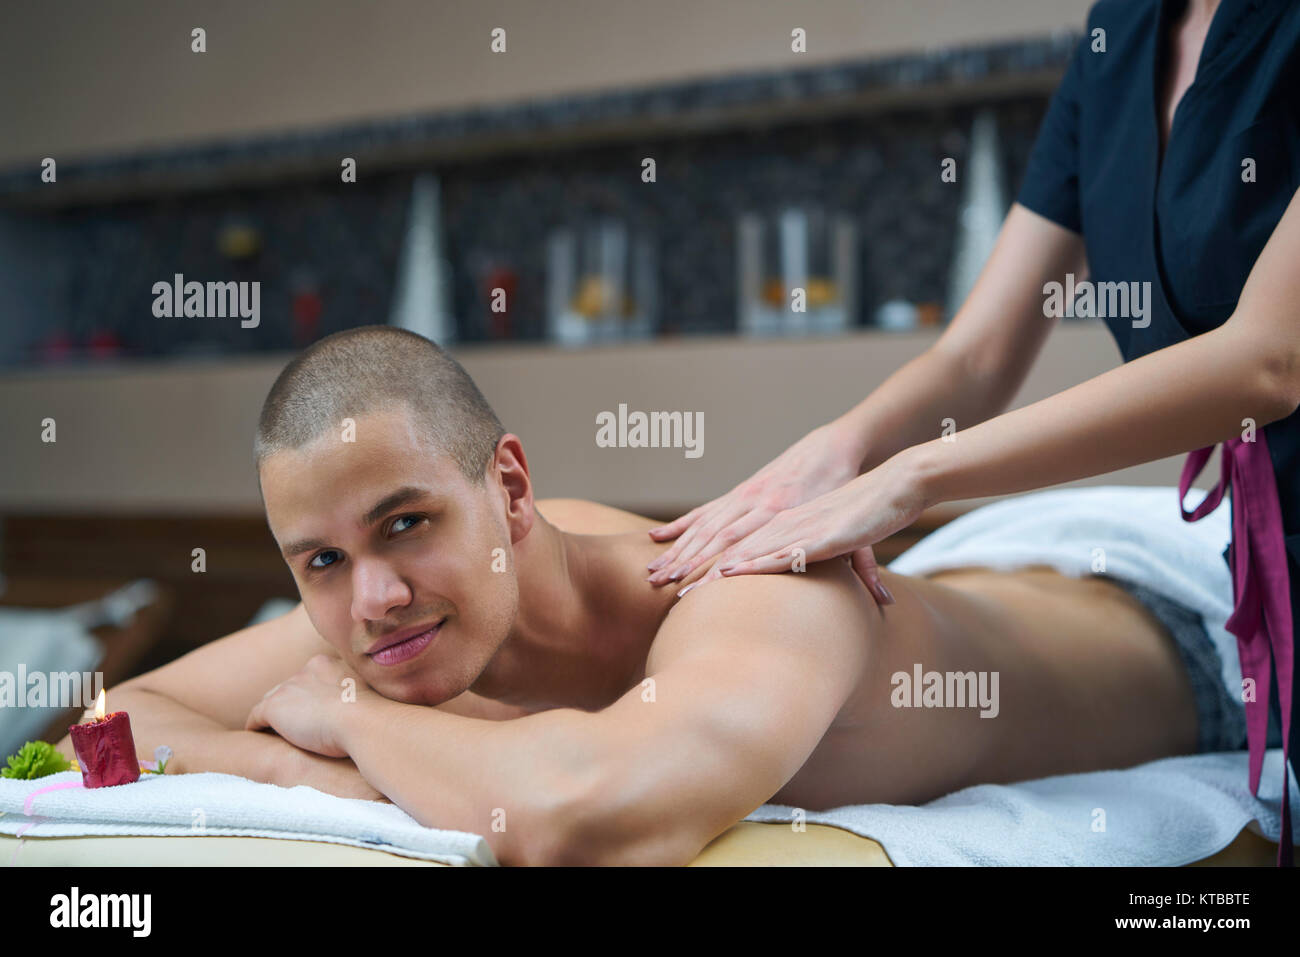 https://c8.alamy.com/comp/KTBBTE/sports-massage-massage-therapist-massaging-shoulders-of-a-male-athlete-KTBBTE.jpg